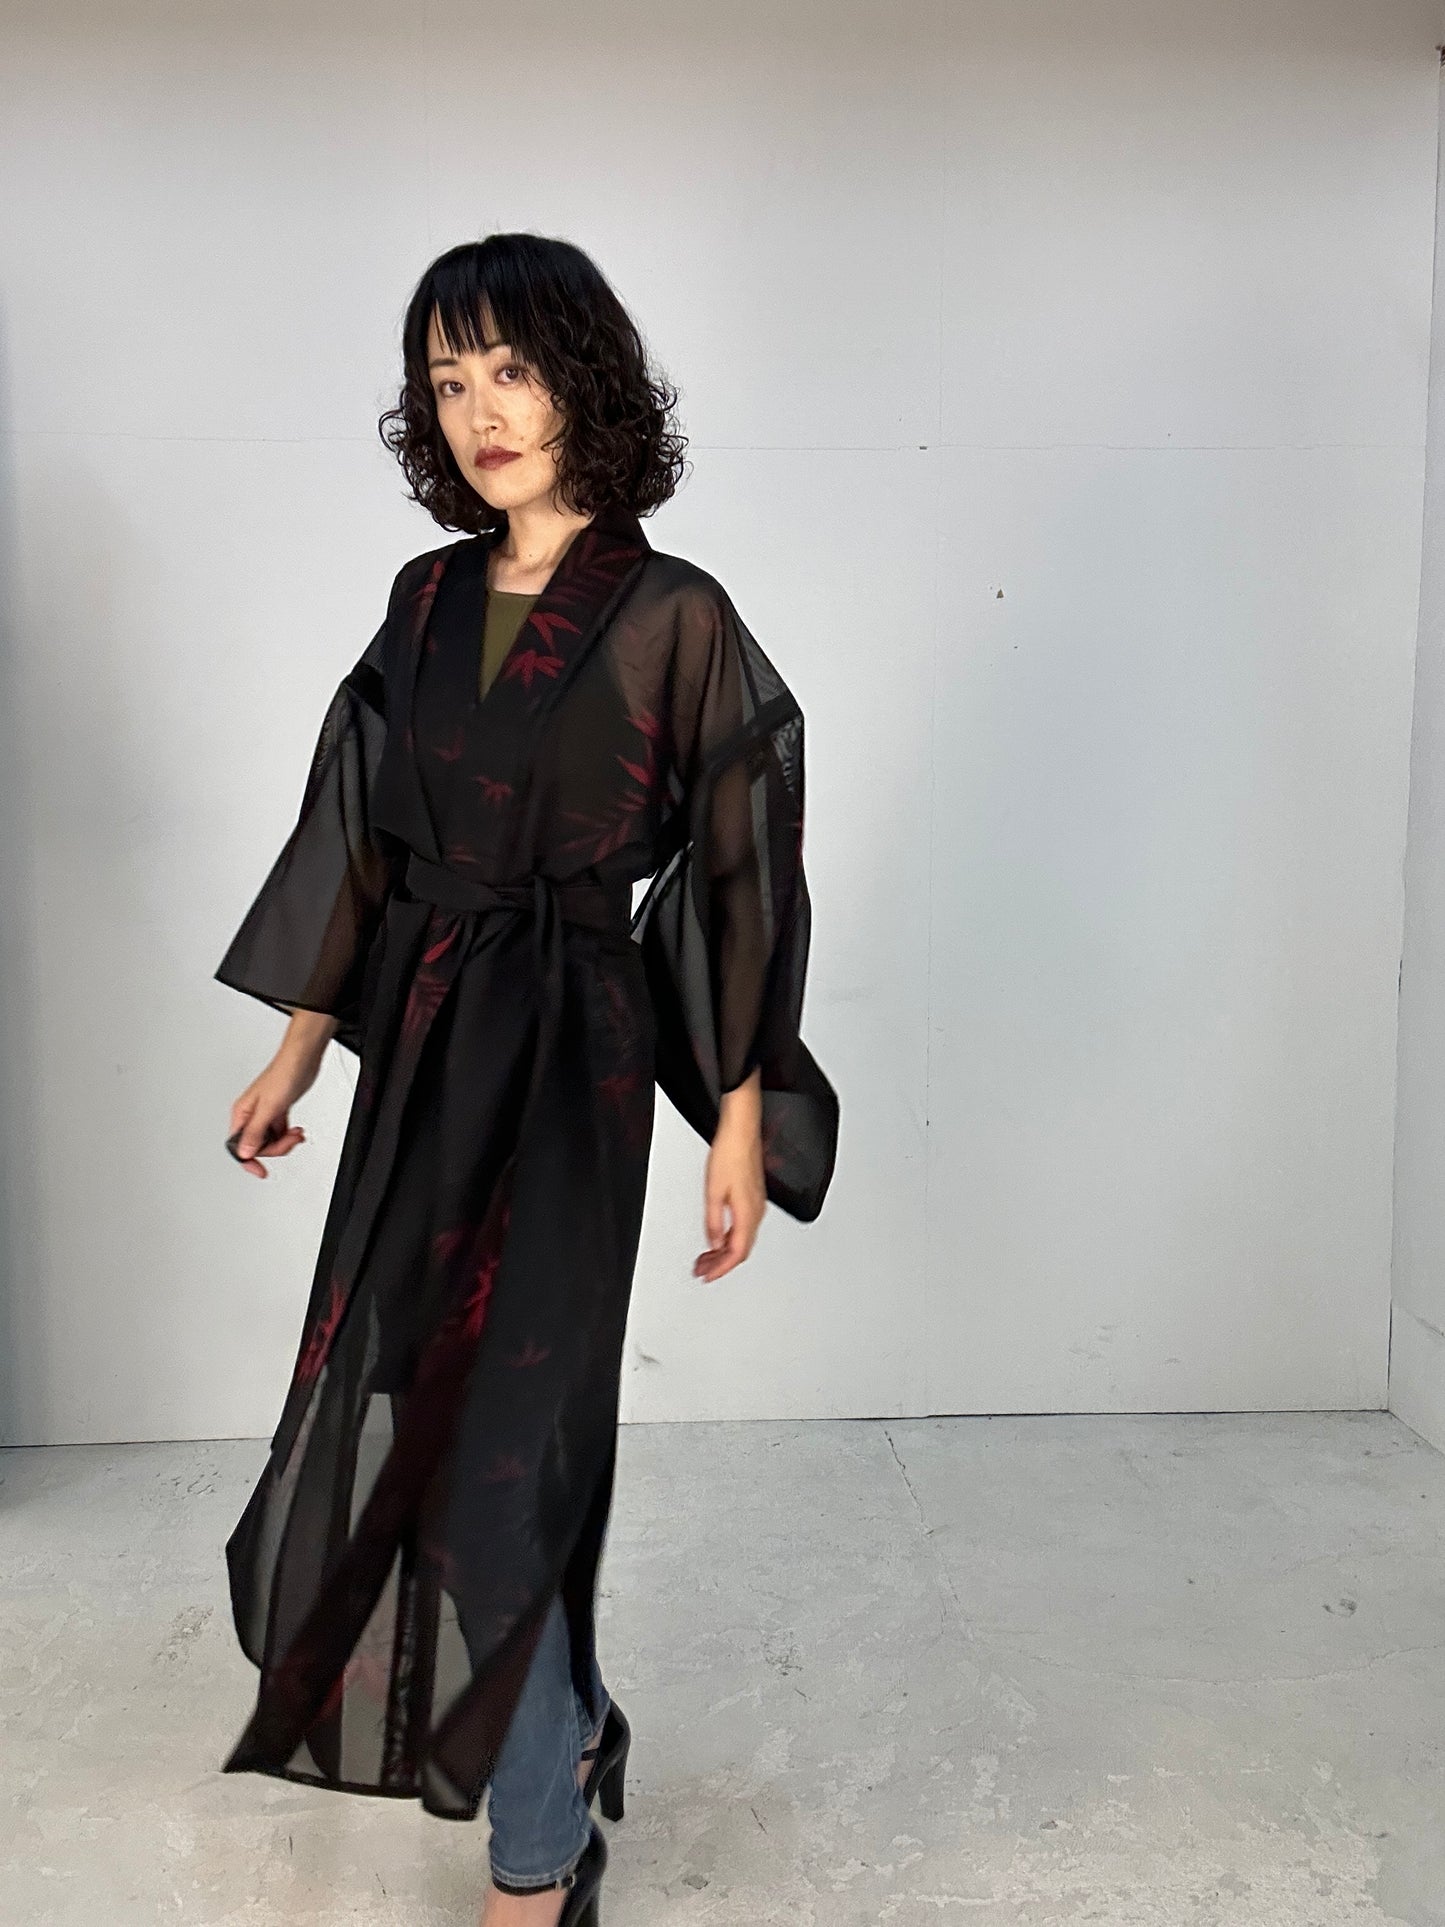 SHEER kimono dress gown and string belt upcycled from Japanese kimono "sasa"